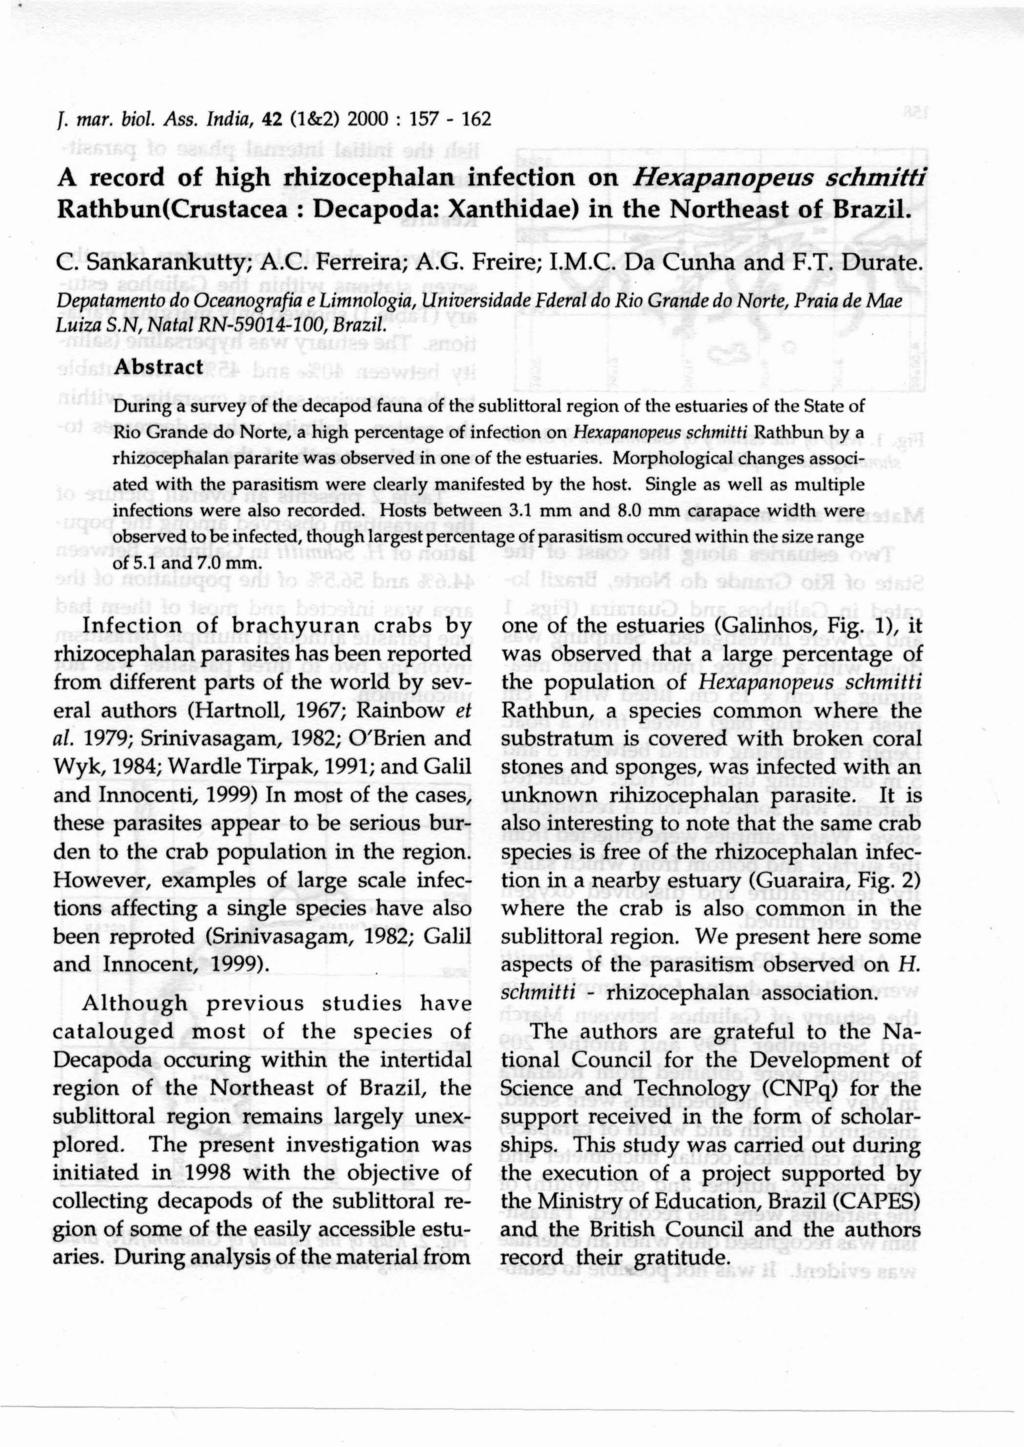 I. mar. biol. Ass. India, 42 (1812) 2000 : 157-162 A record of high rhizocephalan infection on Hexapanopeus schmitti Rathbun(Crustacea : Decapoda: Xanthidae) in the Northeast of Brazil. C.